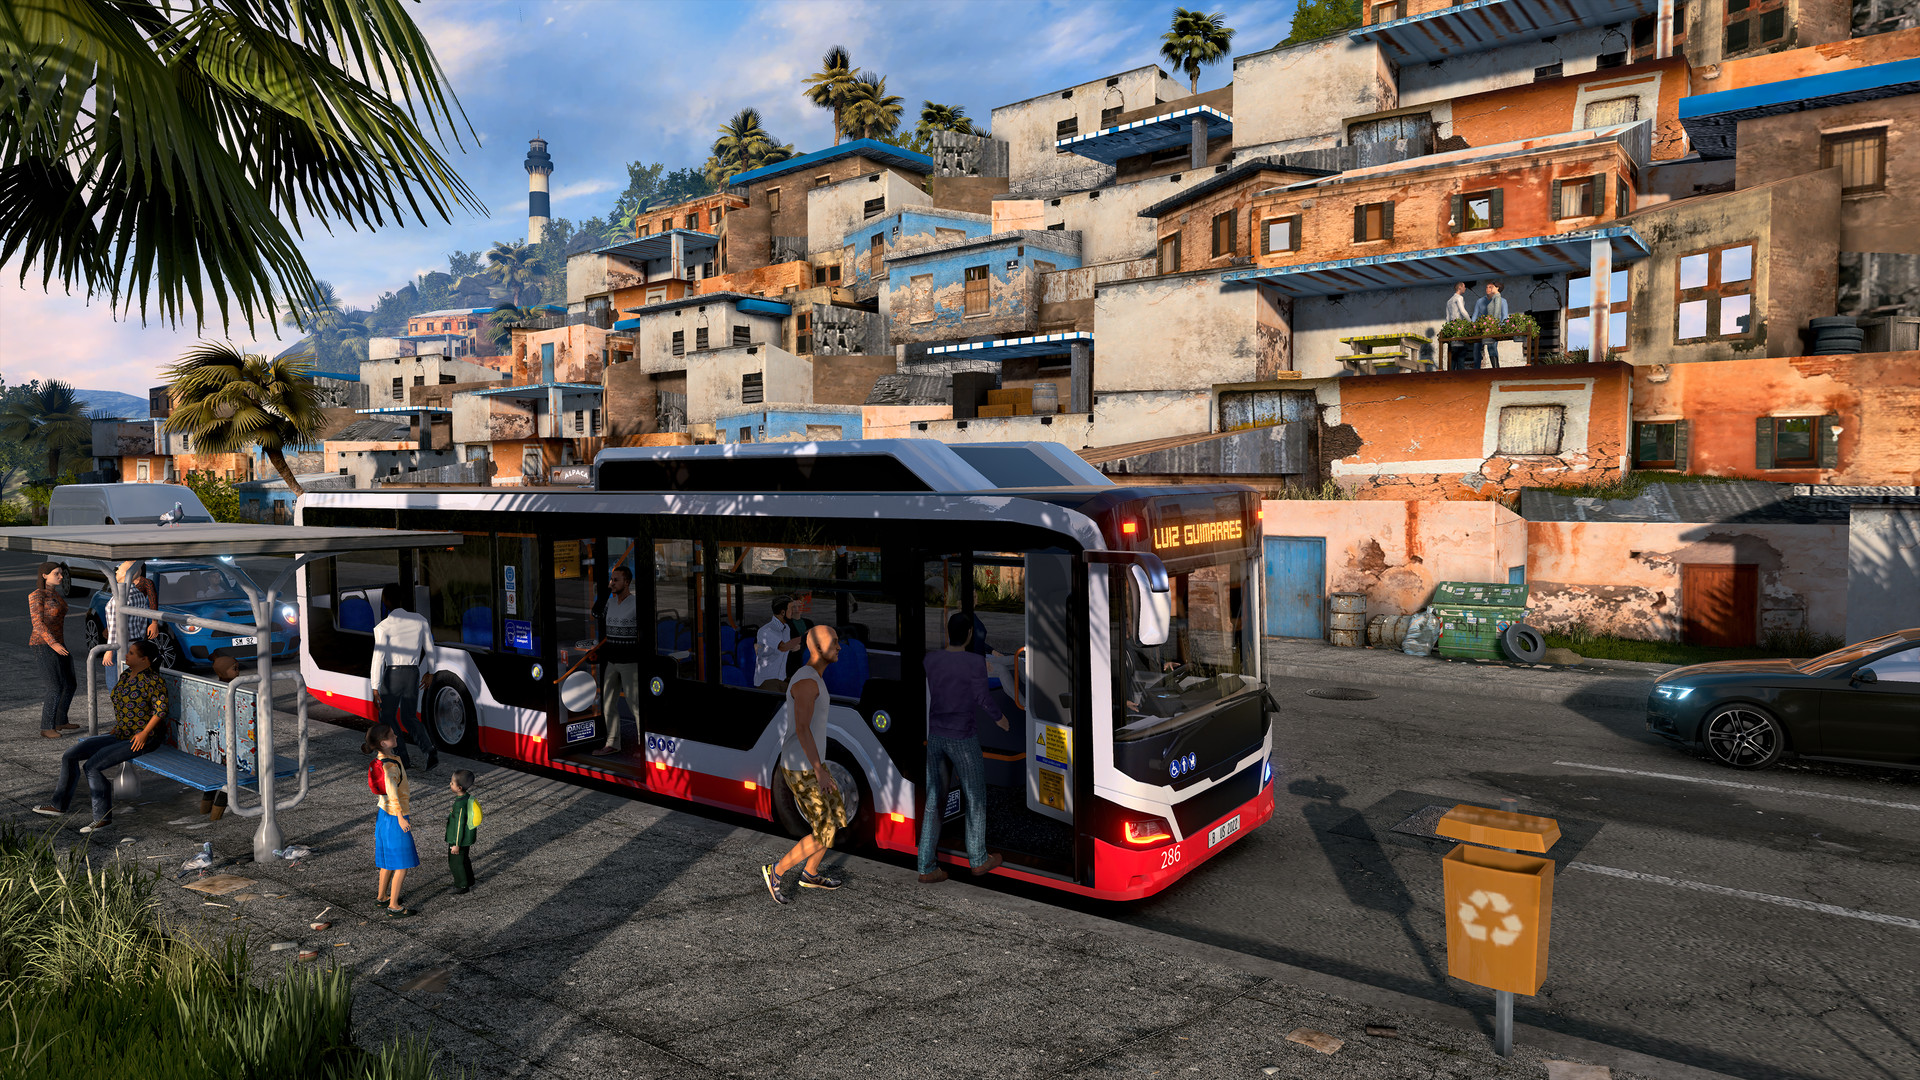 City Bus Driver Simulator on Steam